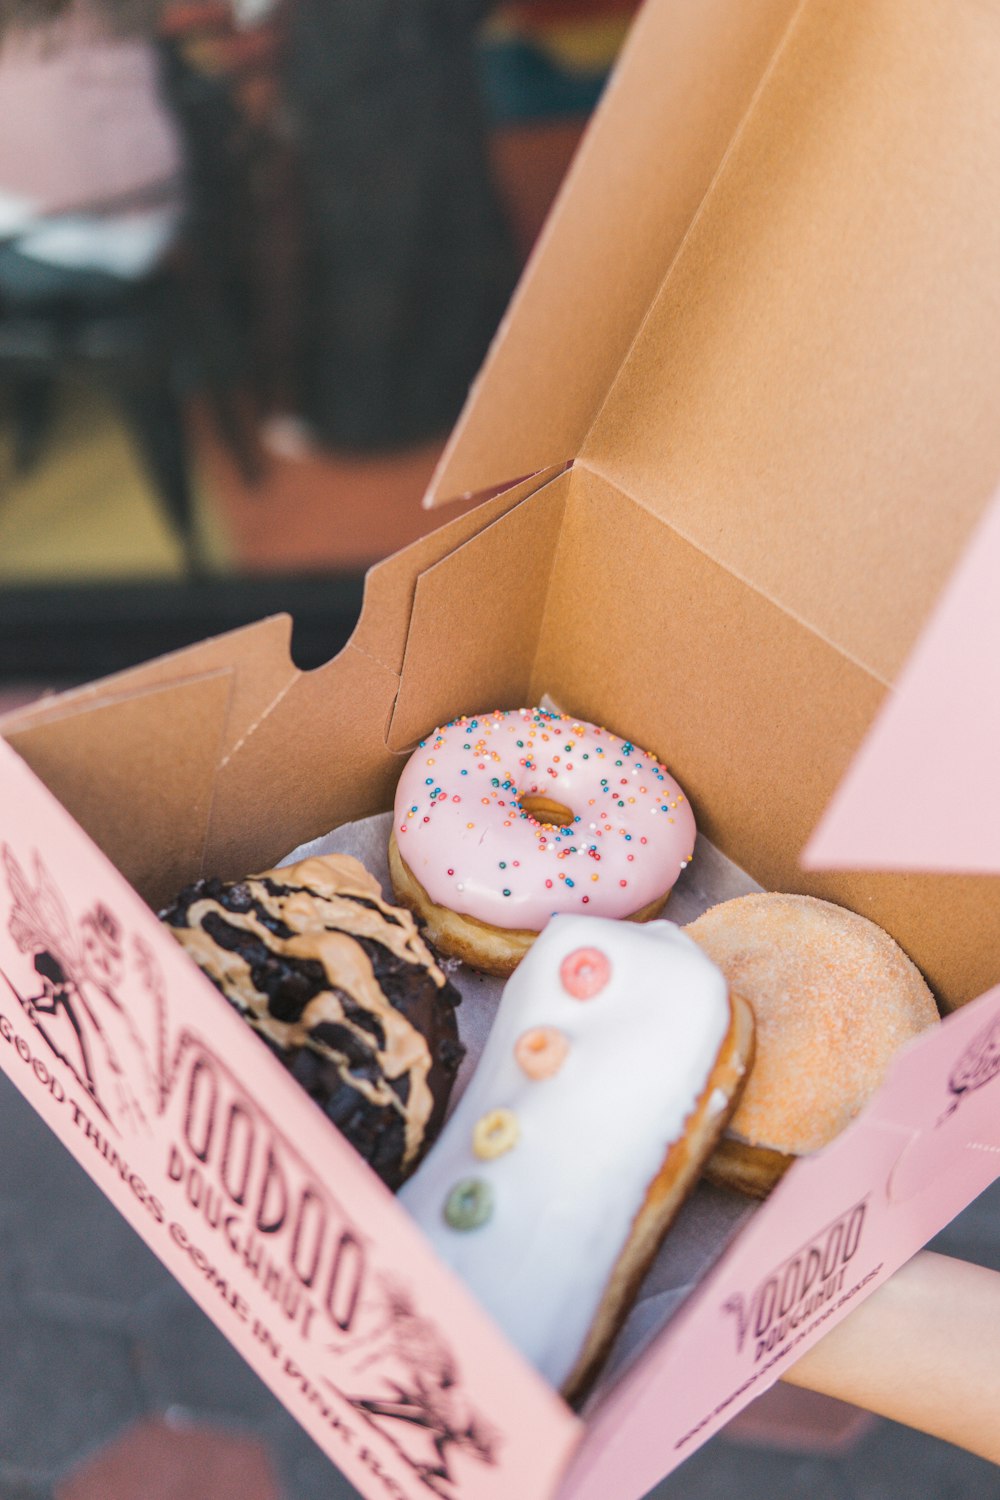 Voodoo donuts in box